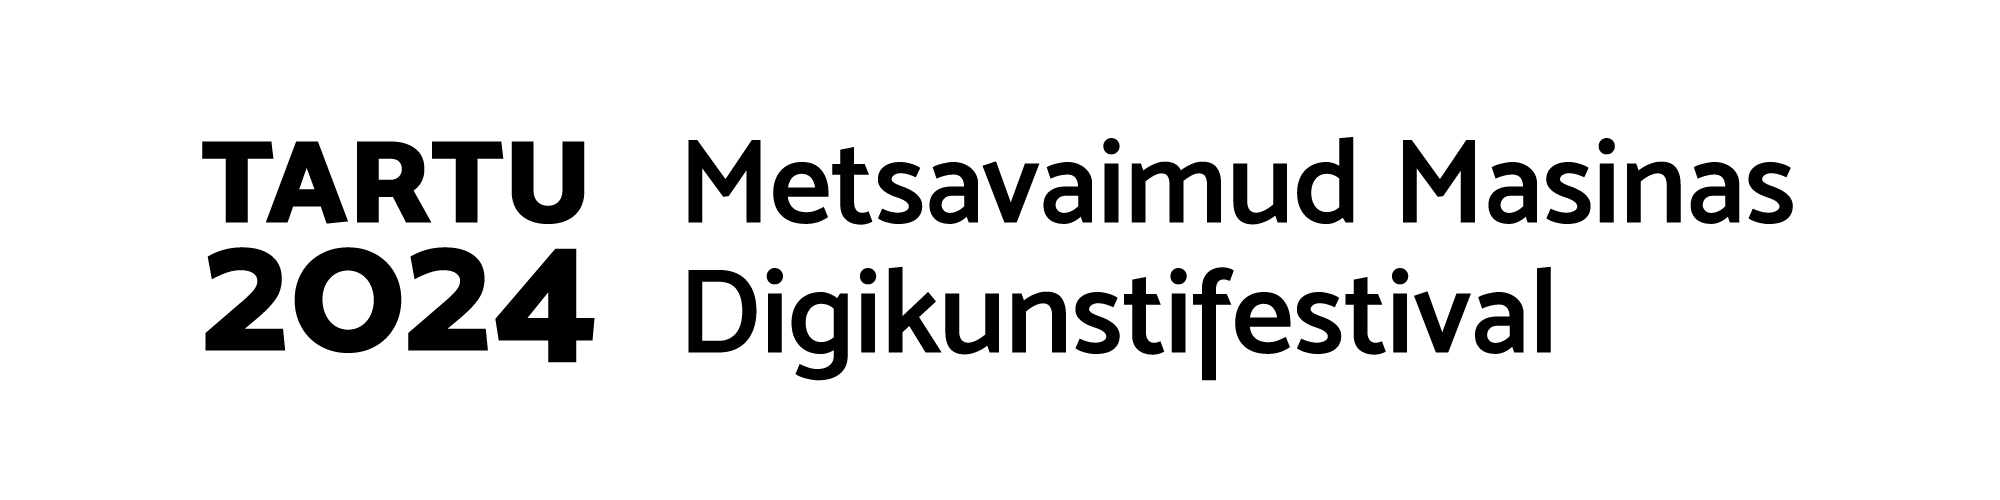 Tartu2024 Metsavaimud Logo